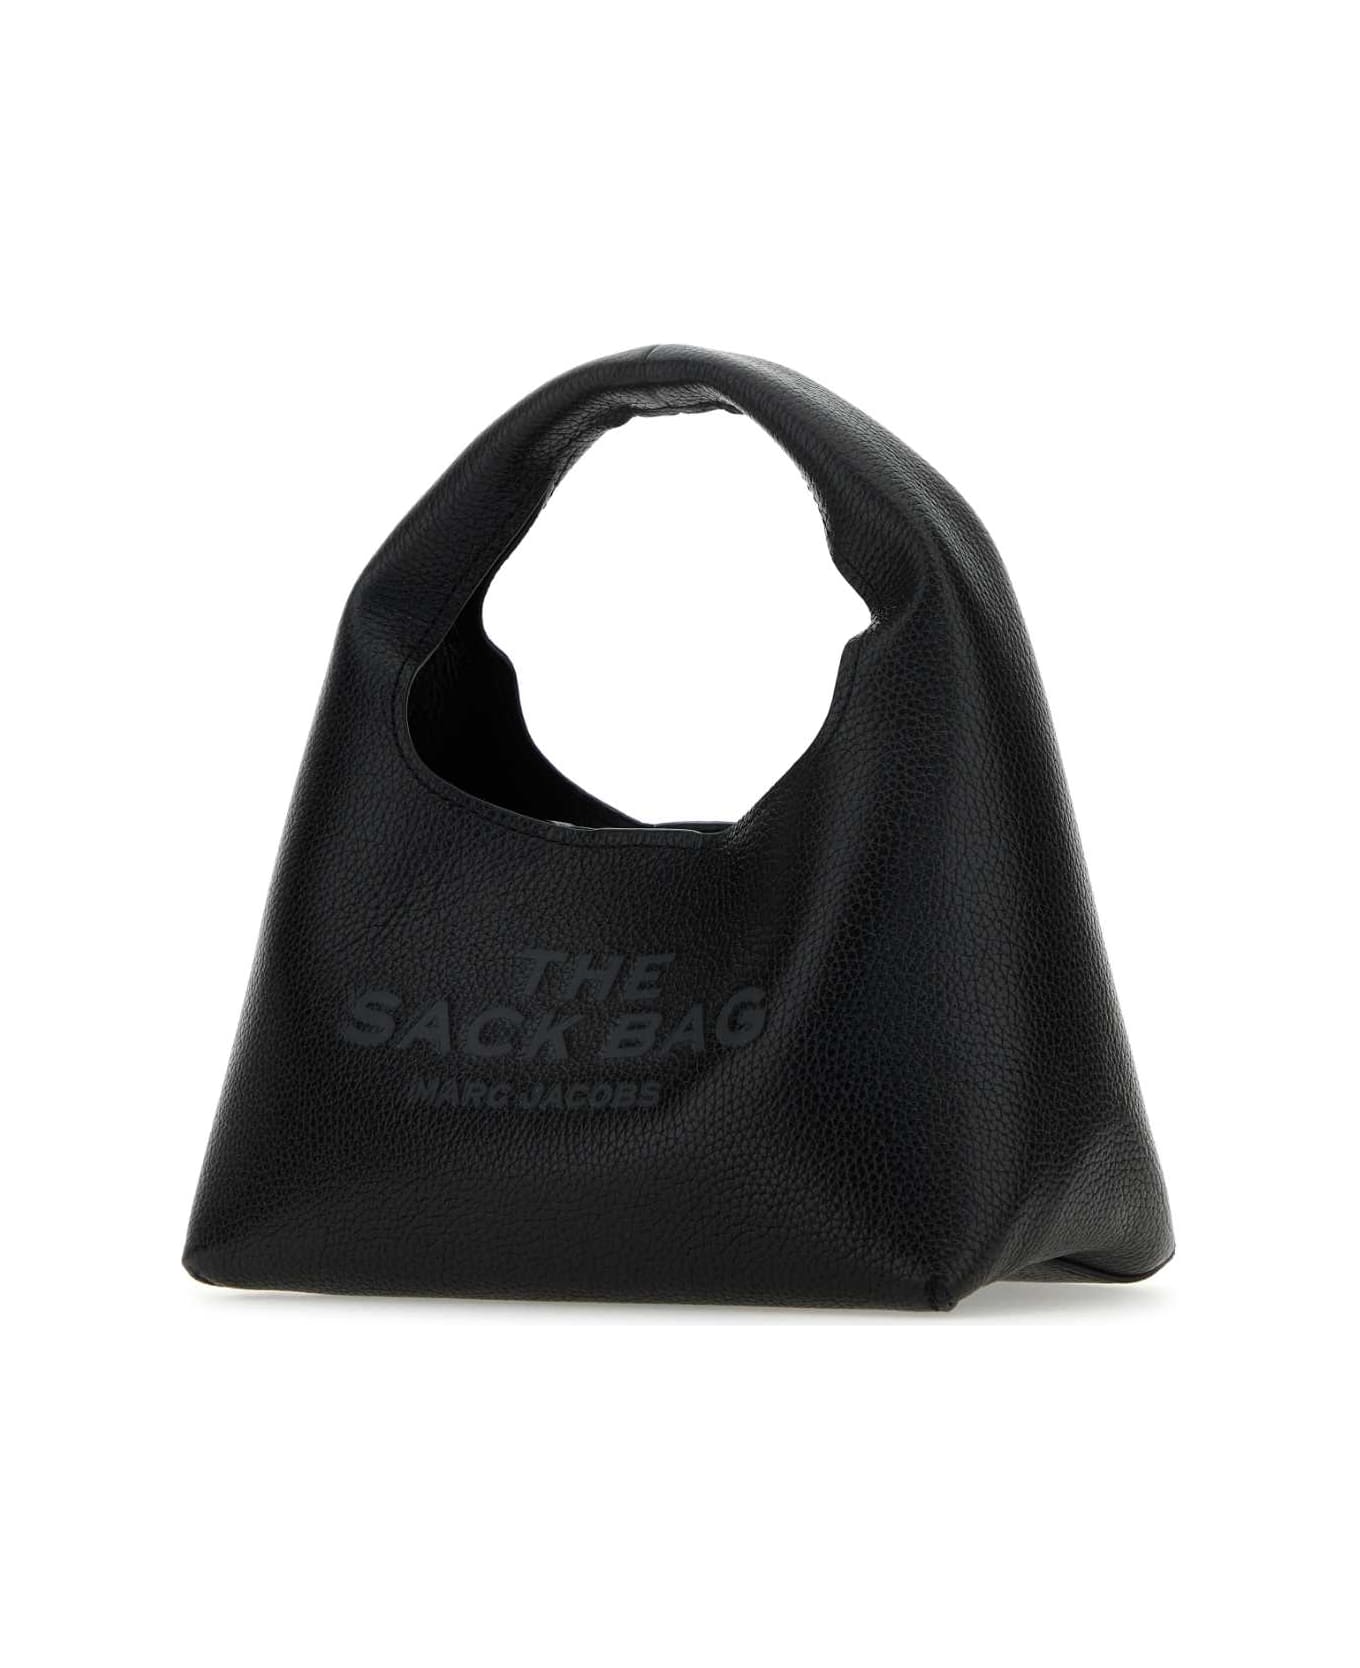 Marc Jacobs Black Leather Mini The Sack Bag Handbag - Black